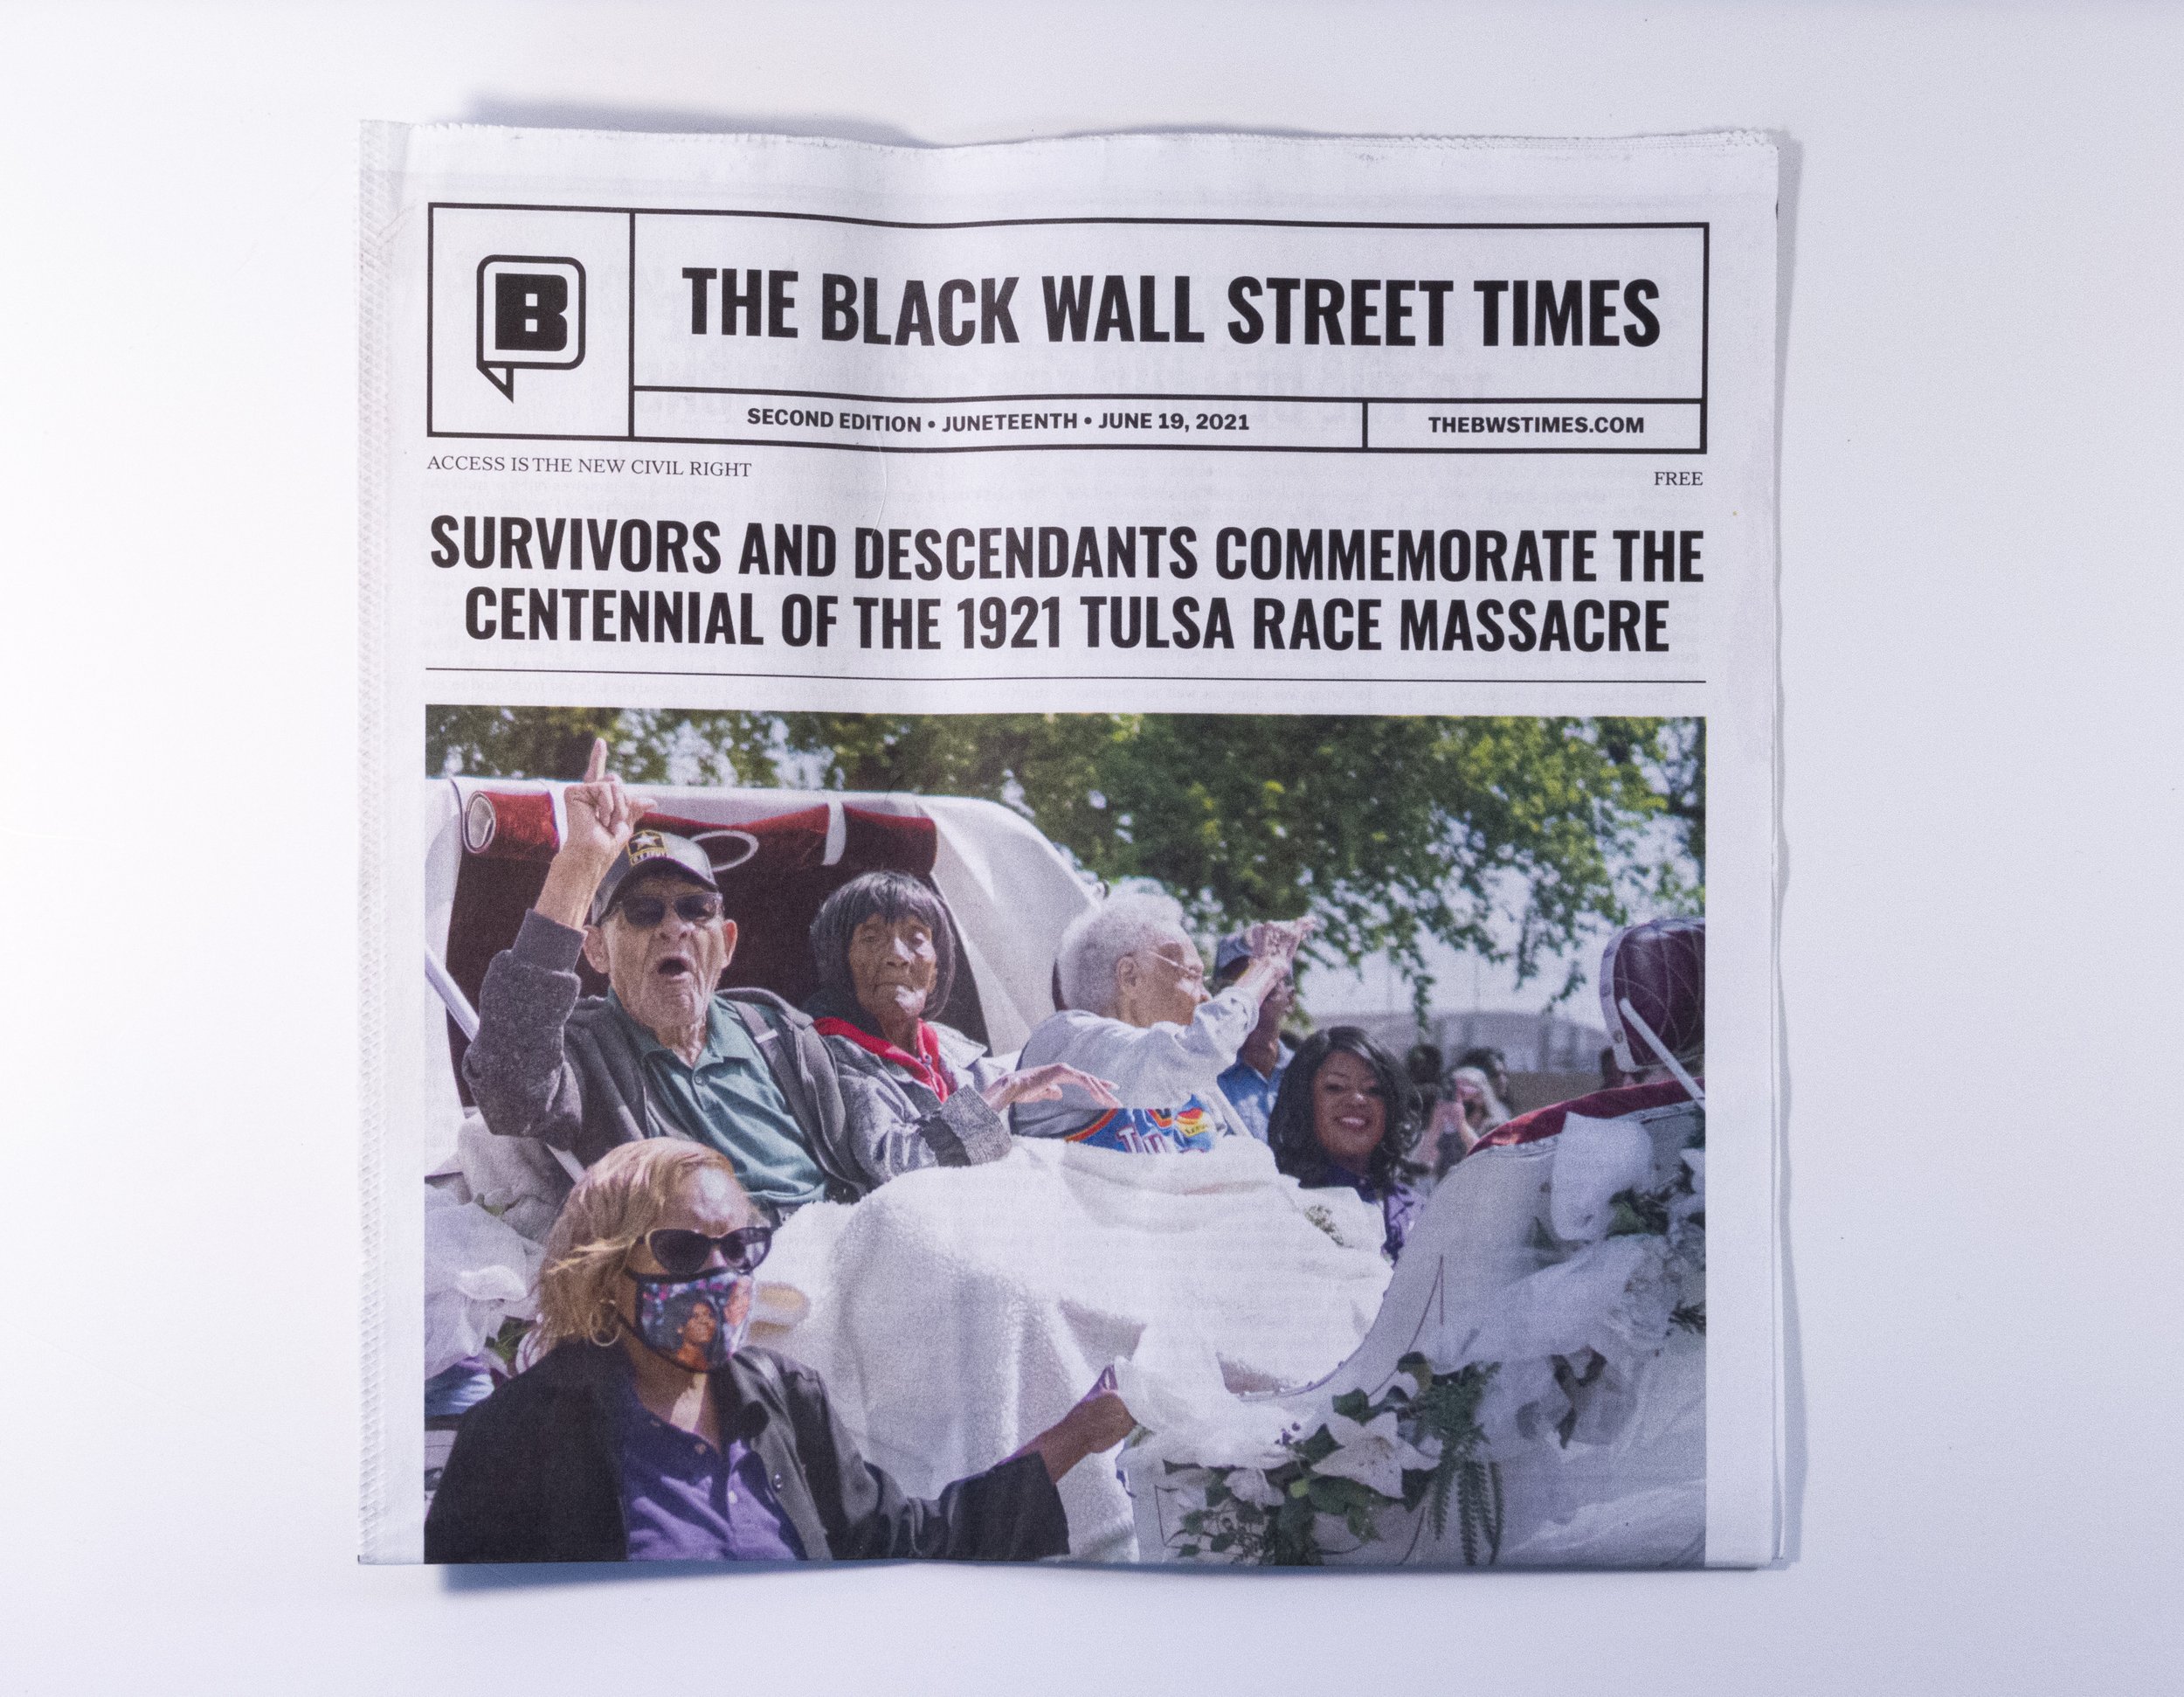 The Black Wall Street Times